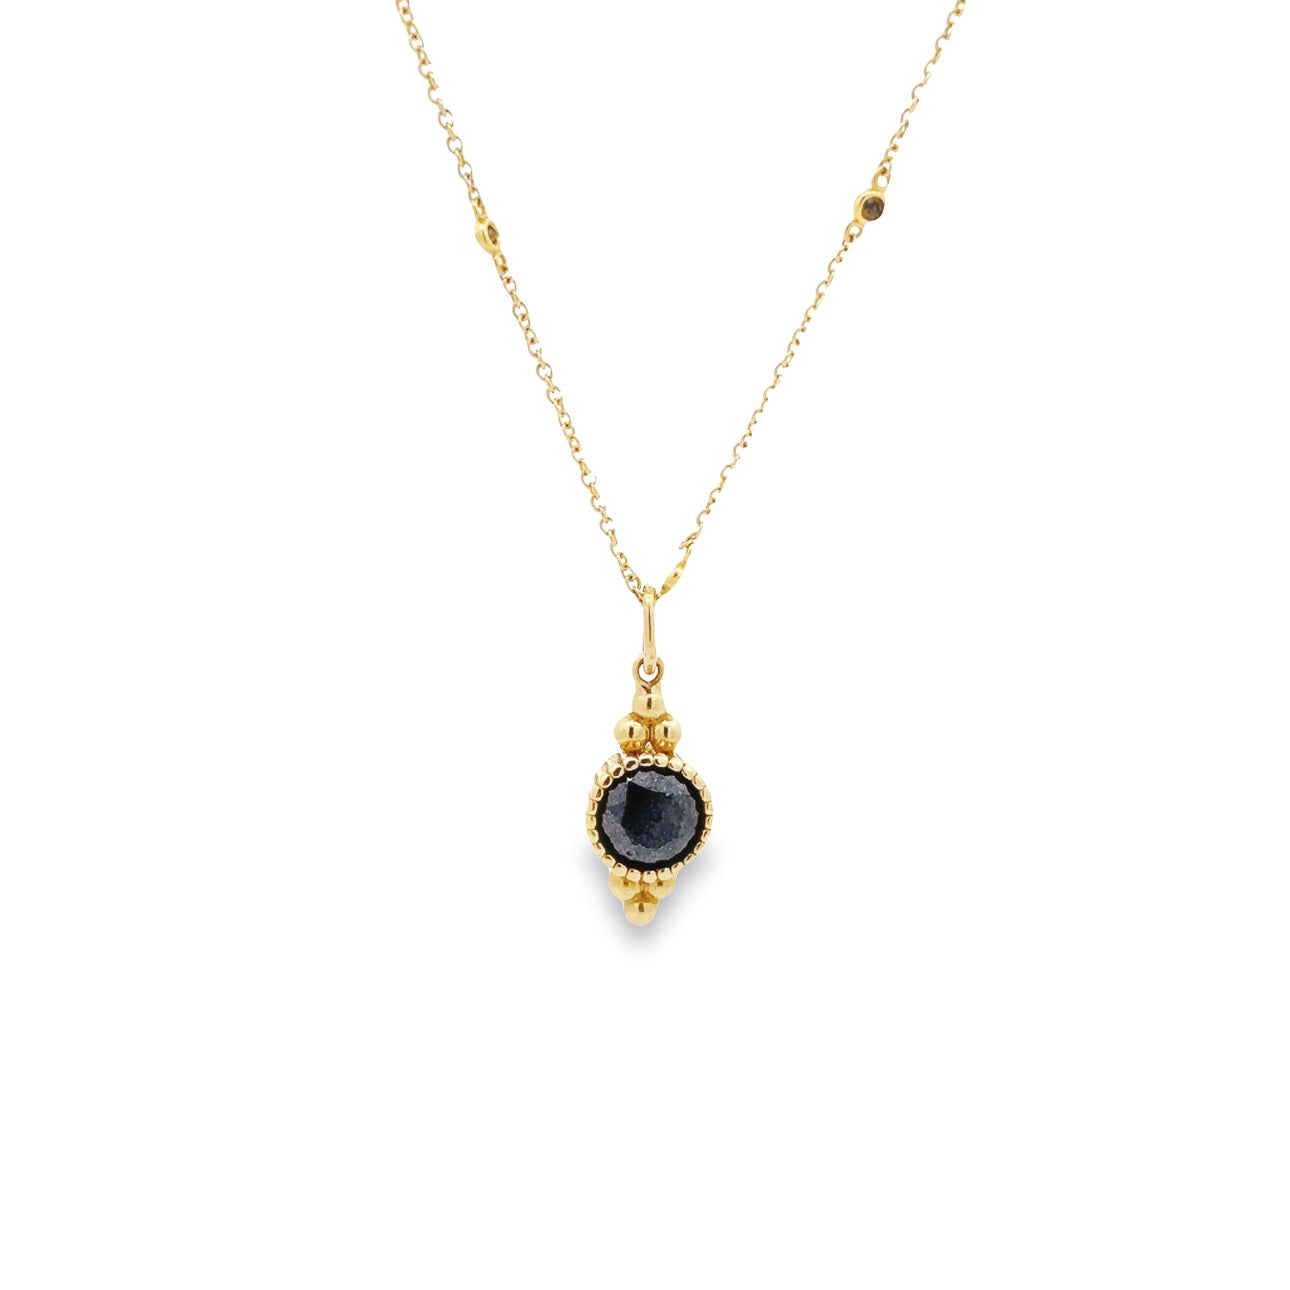 WD1261 14kt Gold Black Diamond by the yard Necklace with Black Diamond Pendant